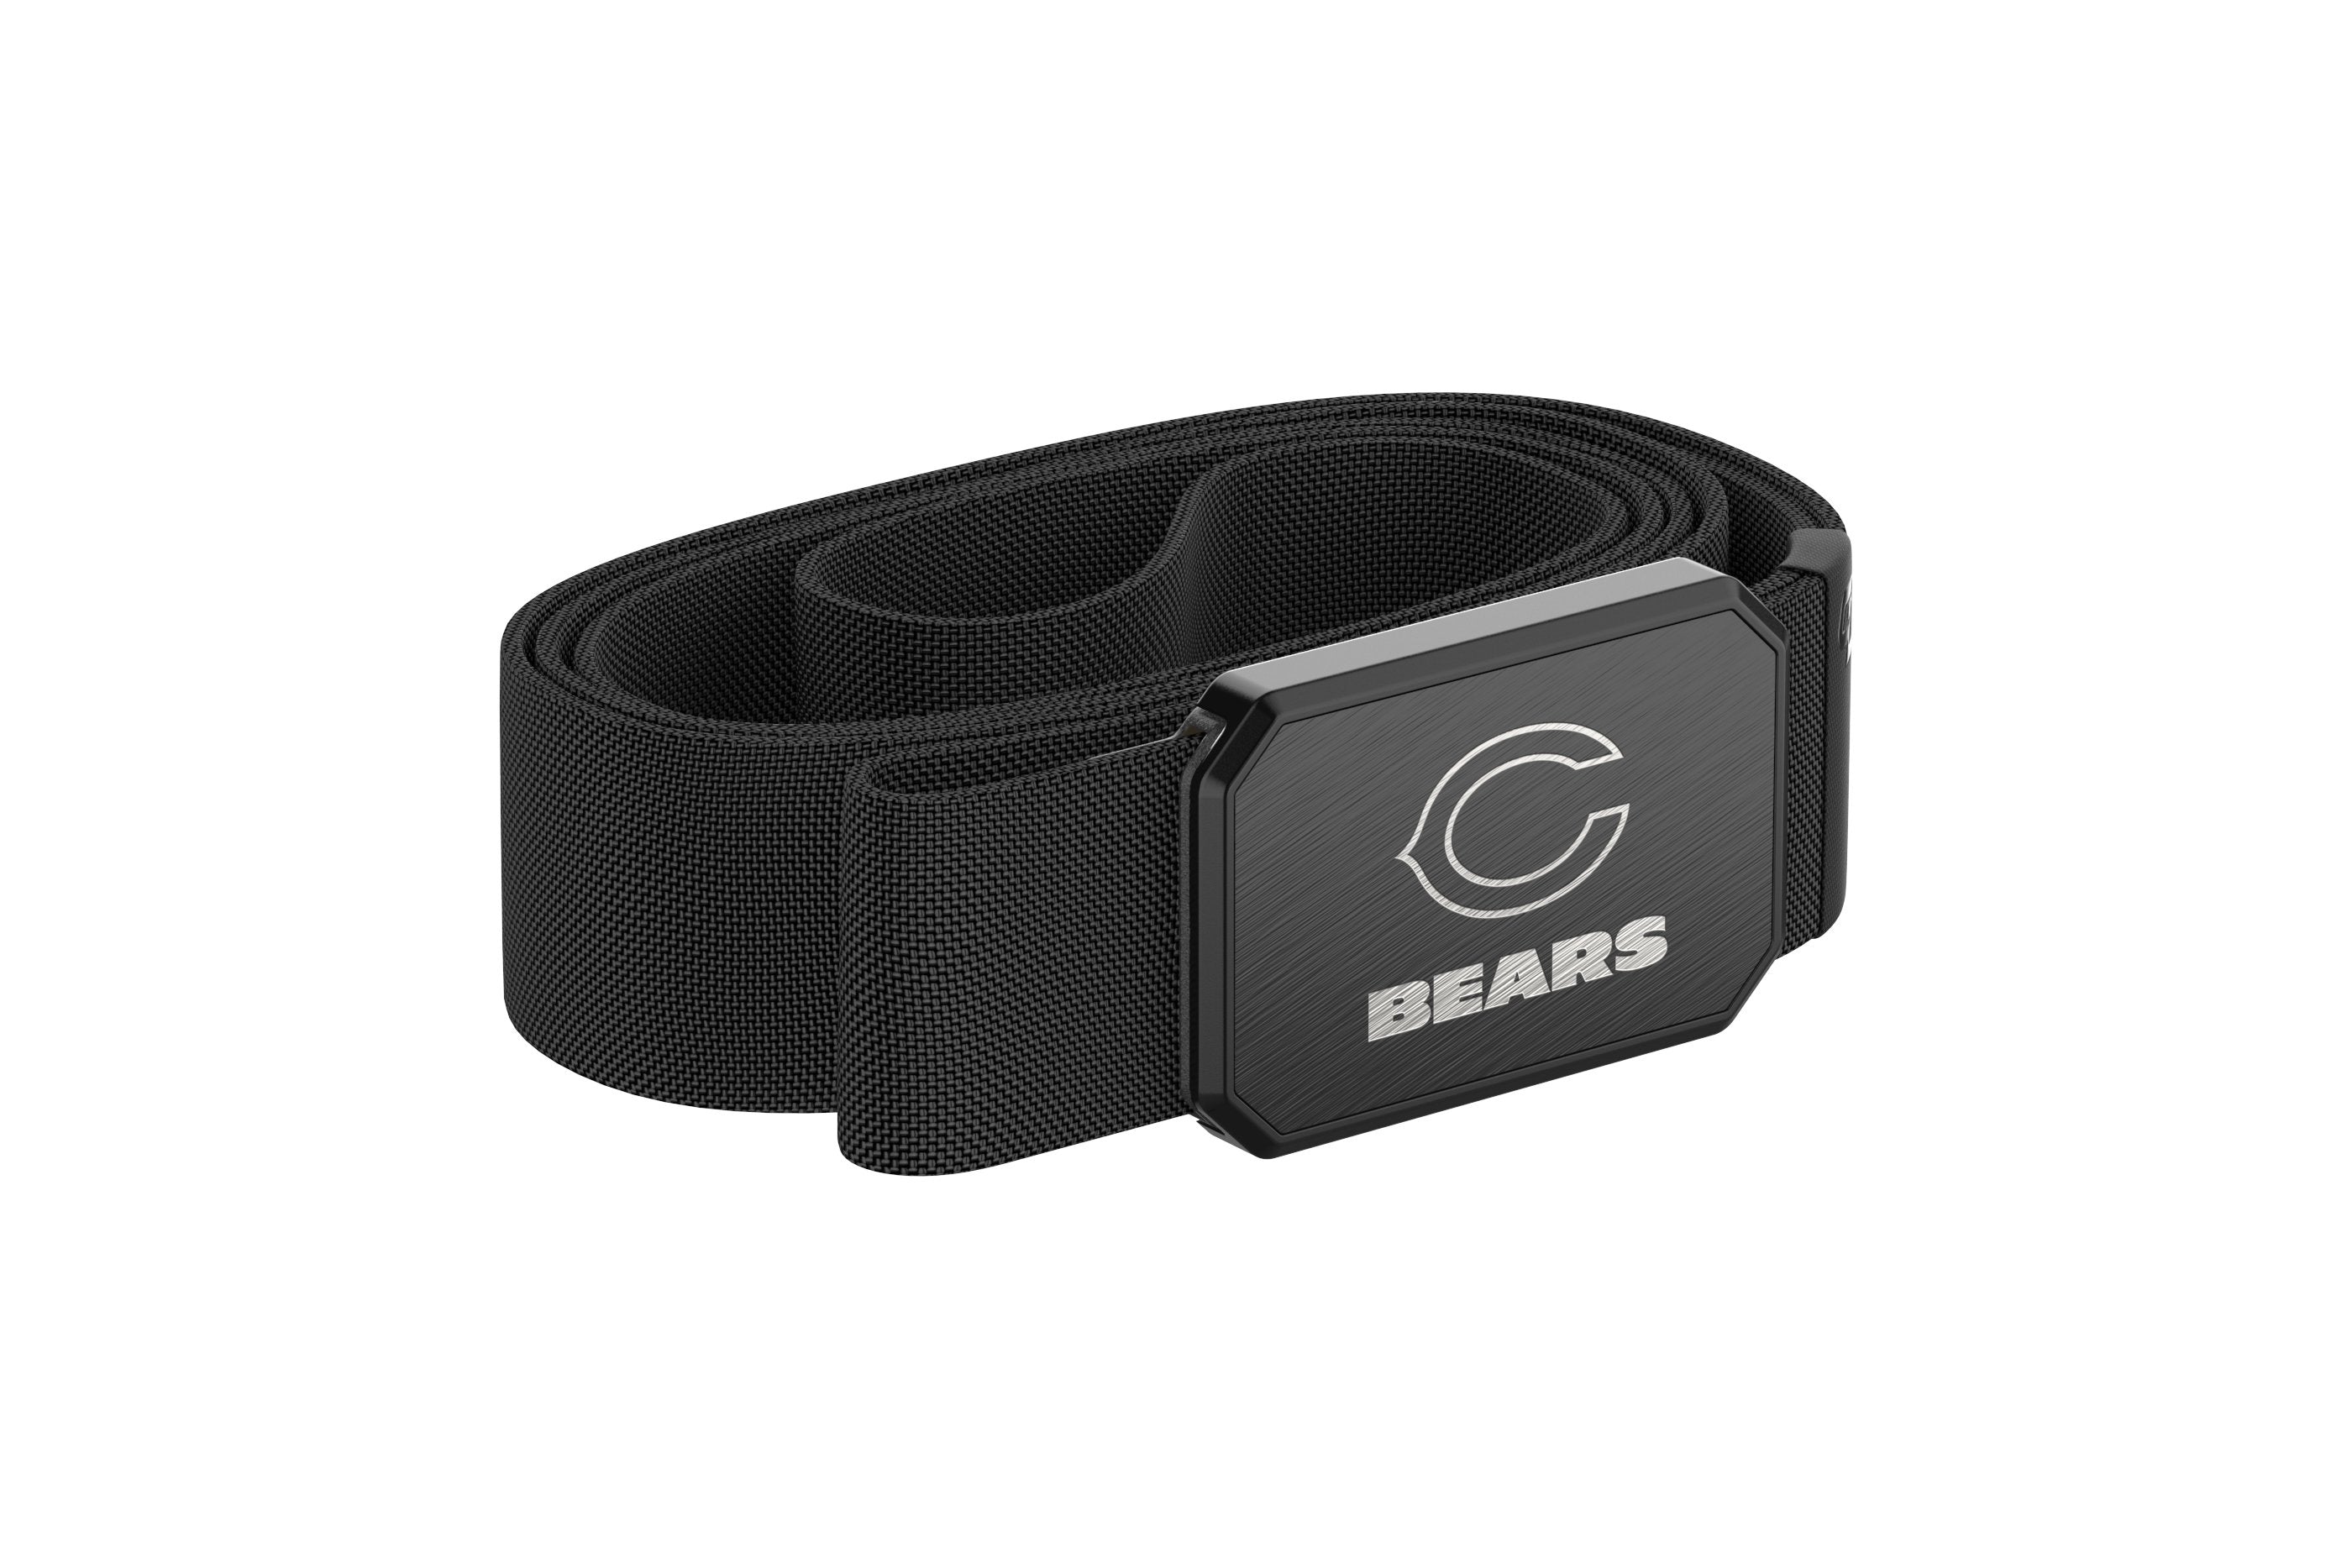 Bears Groove Belt side view